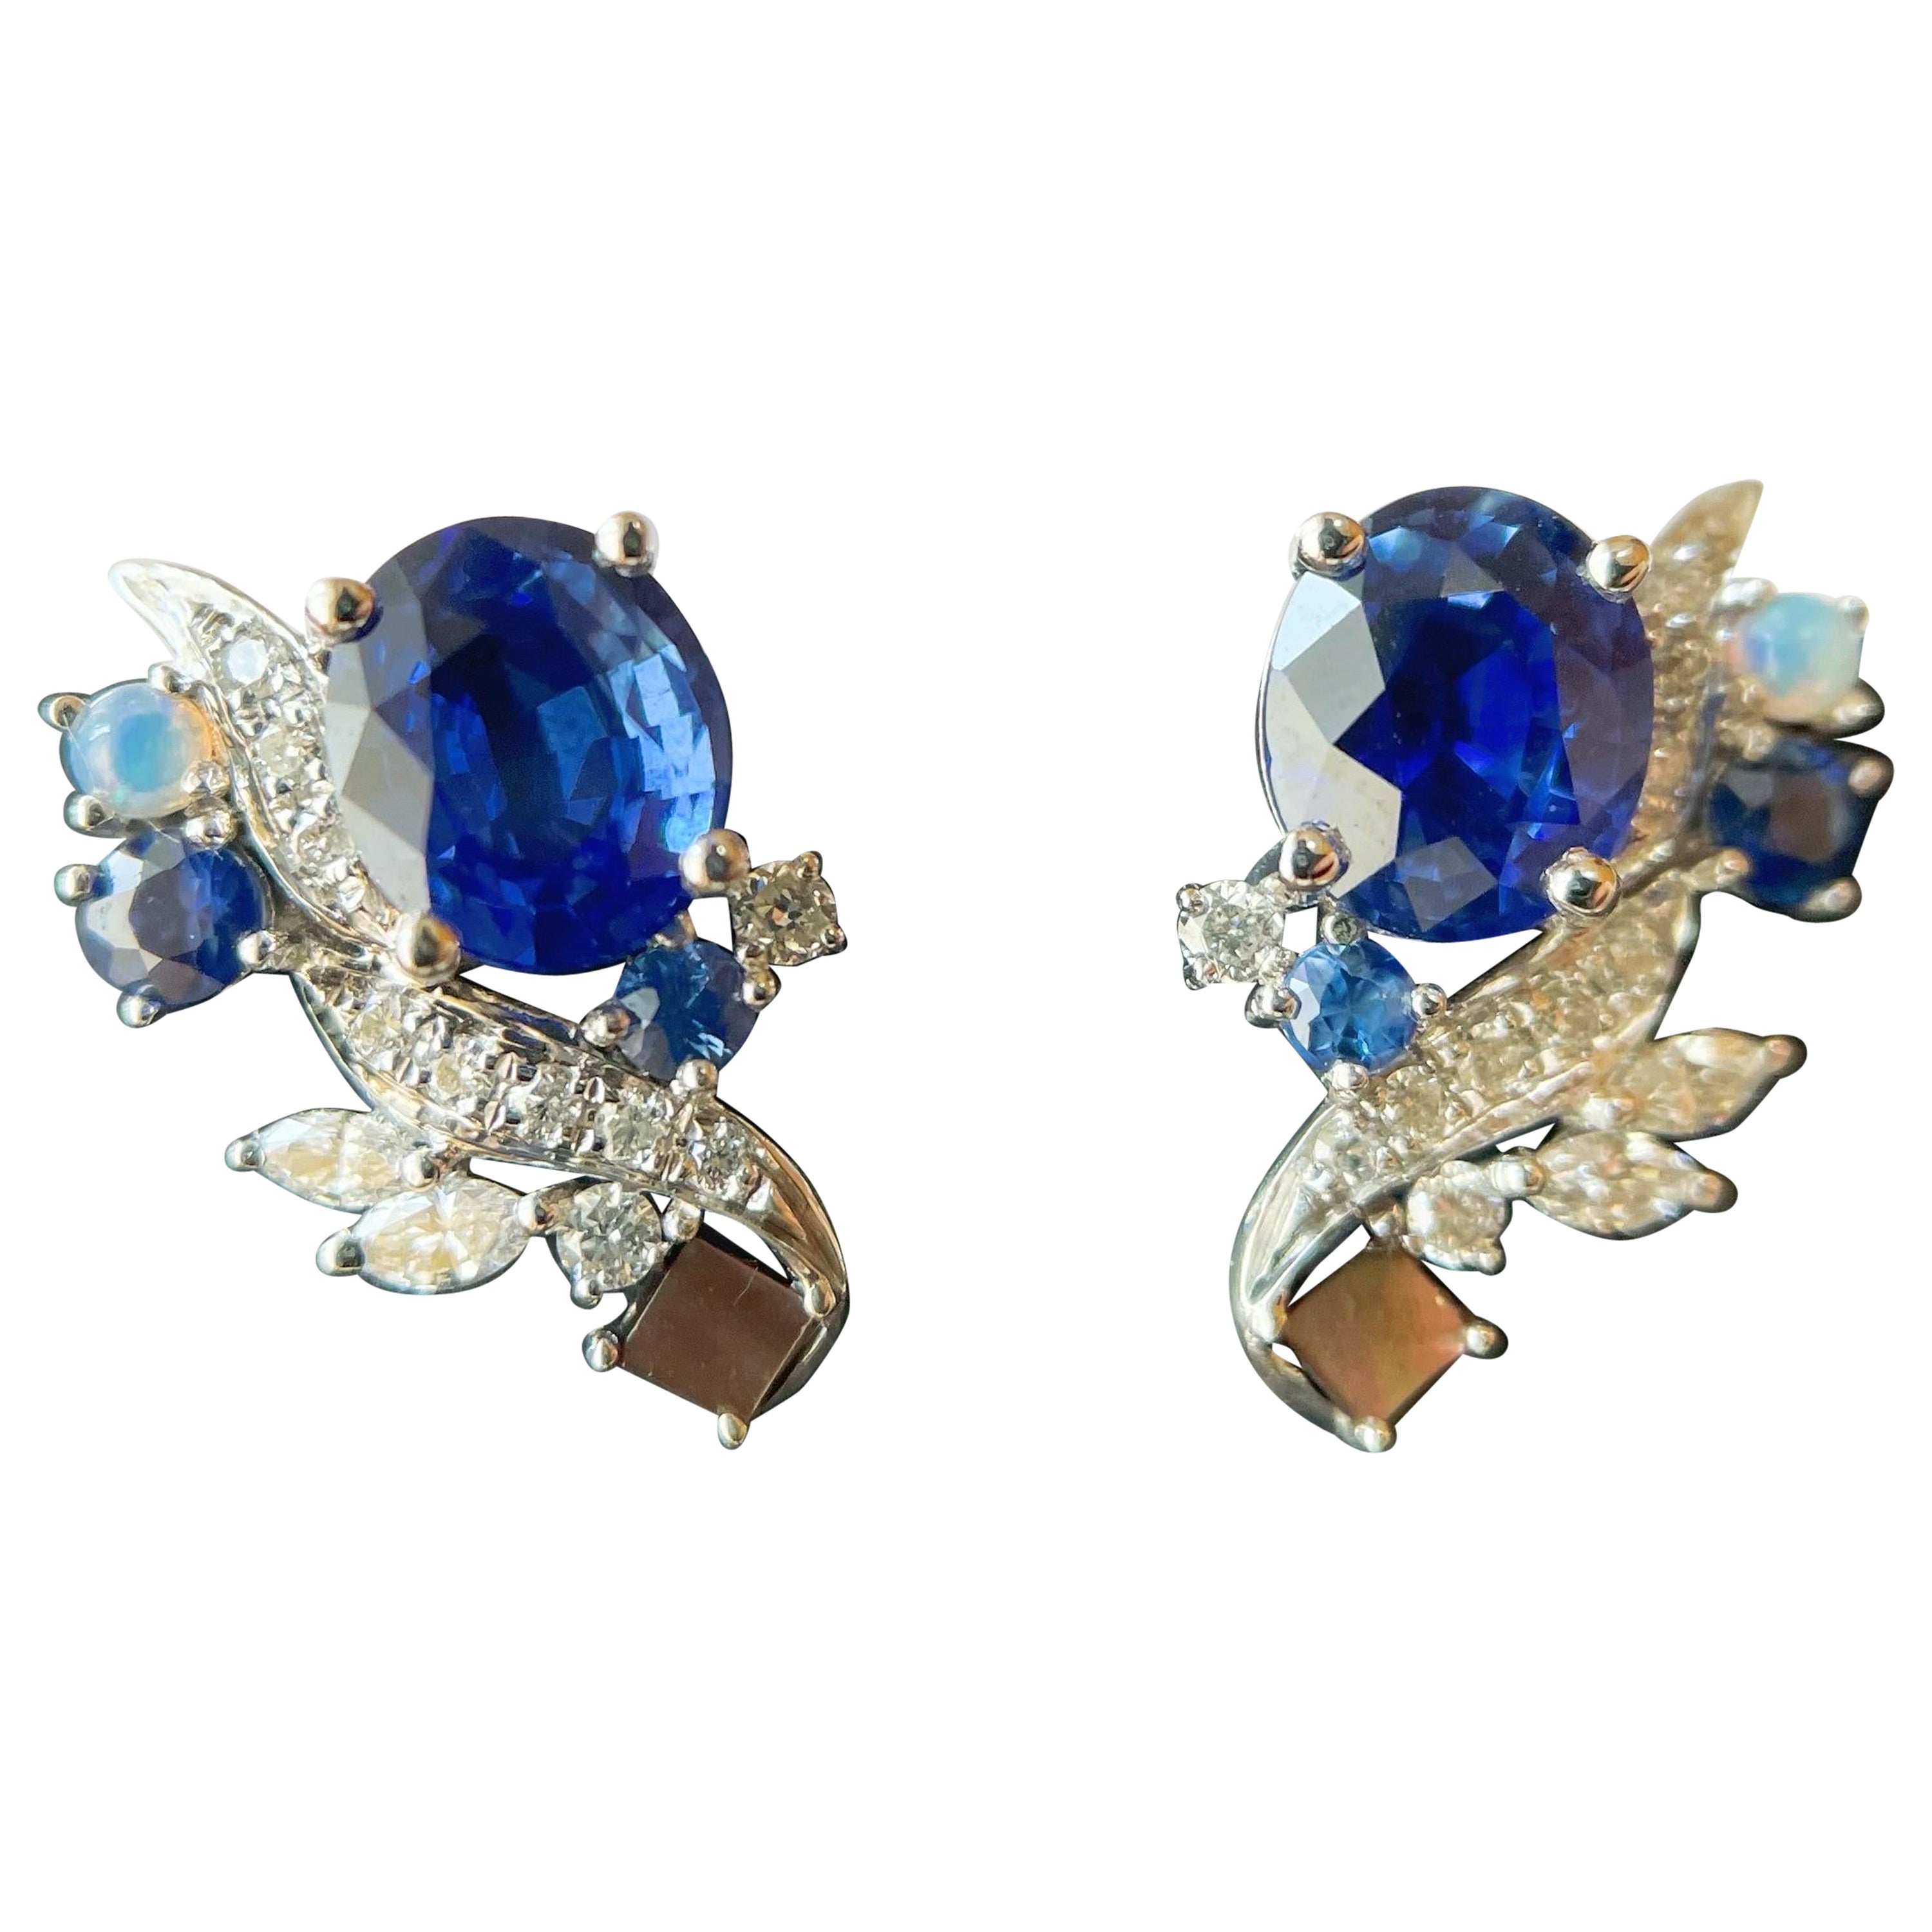 Natural Sri Lanka Royal Blue Sapphire Earrings in 18k White Gold, Opal, Pearl